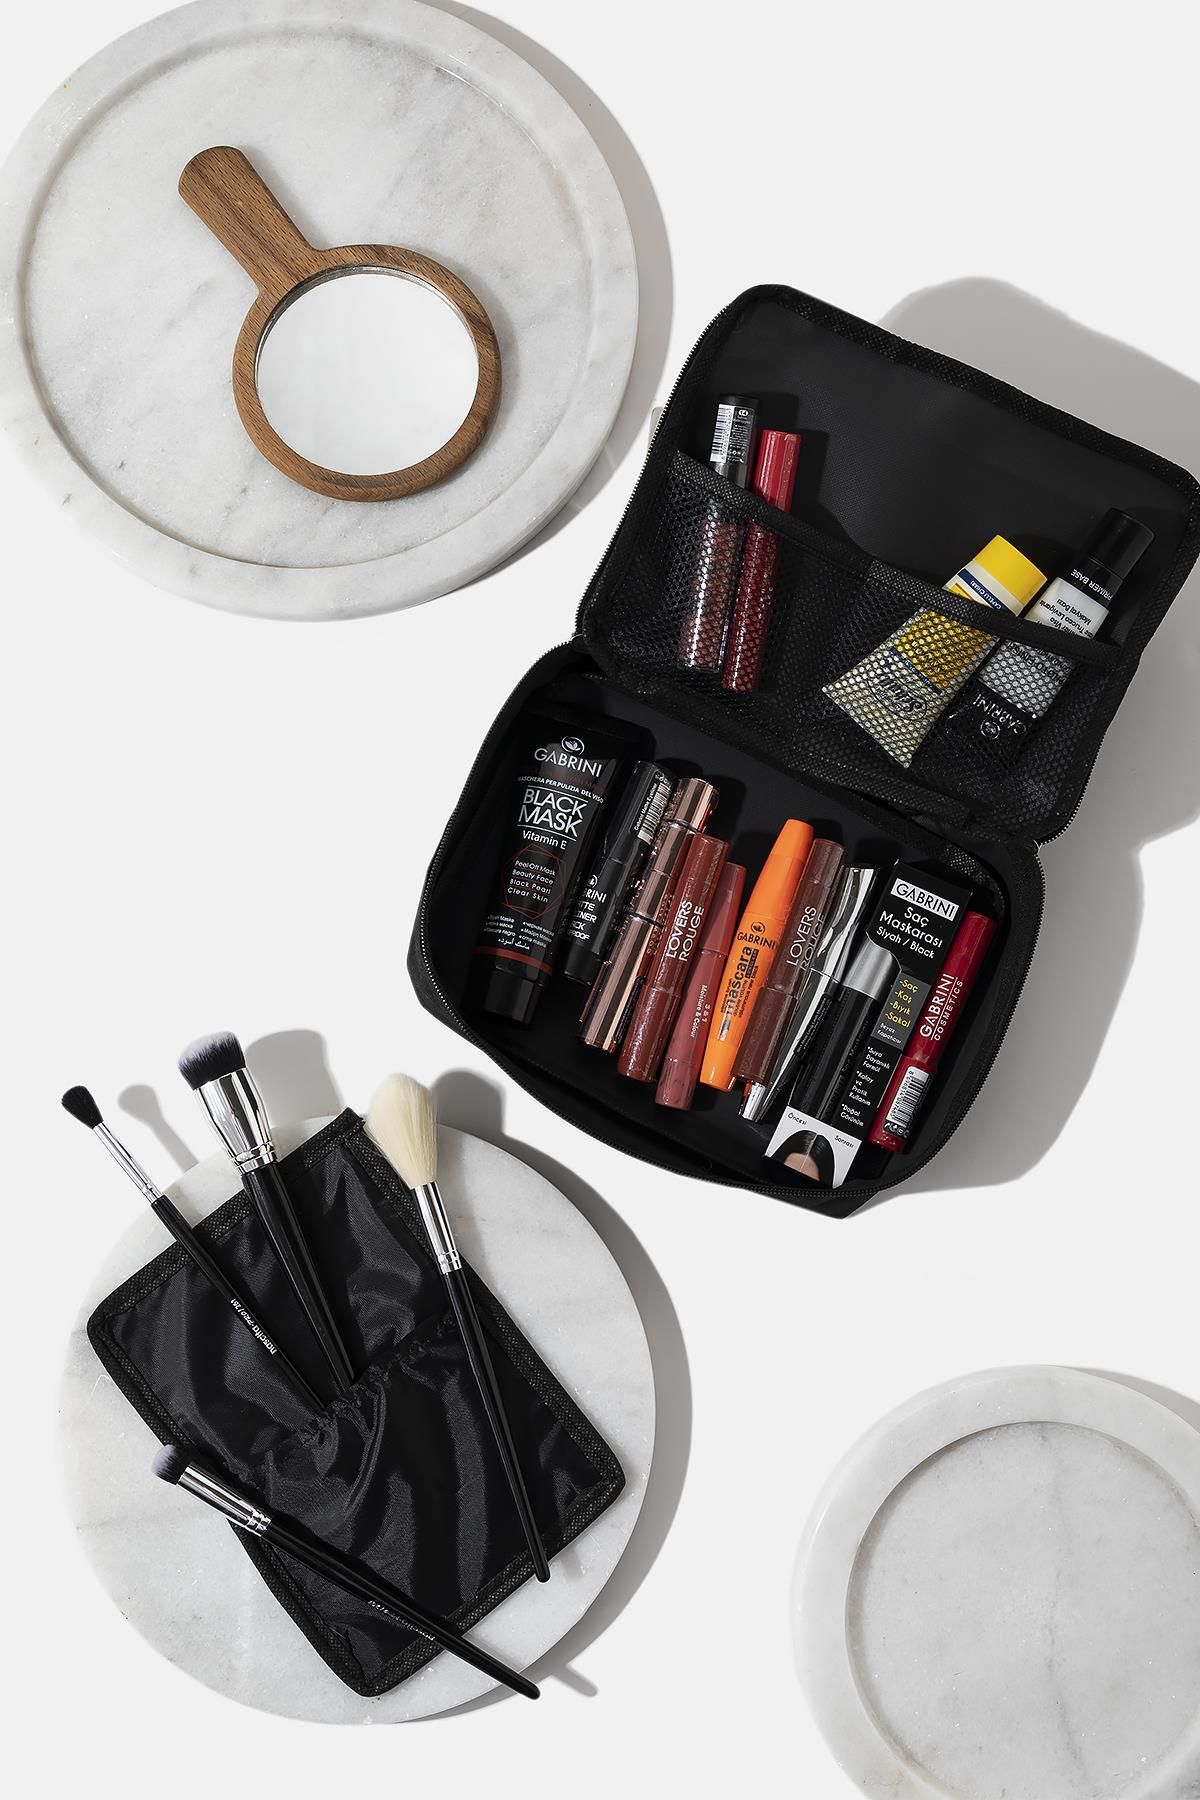 Pharma Acqua Siyah 4 Bölmeli Makyaj Çantası Kozmetik Makyaj Bavul Seti | Bakım Seyahat Makyaj Kozmetik Organizer